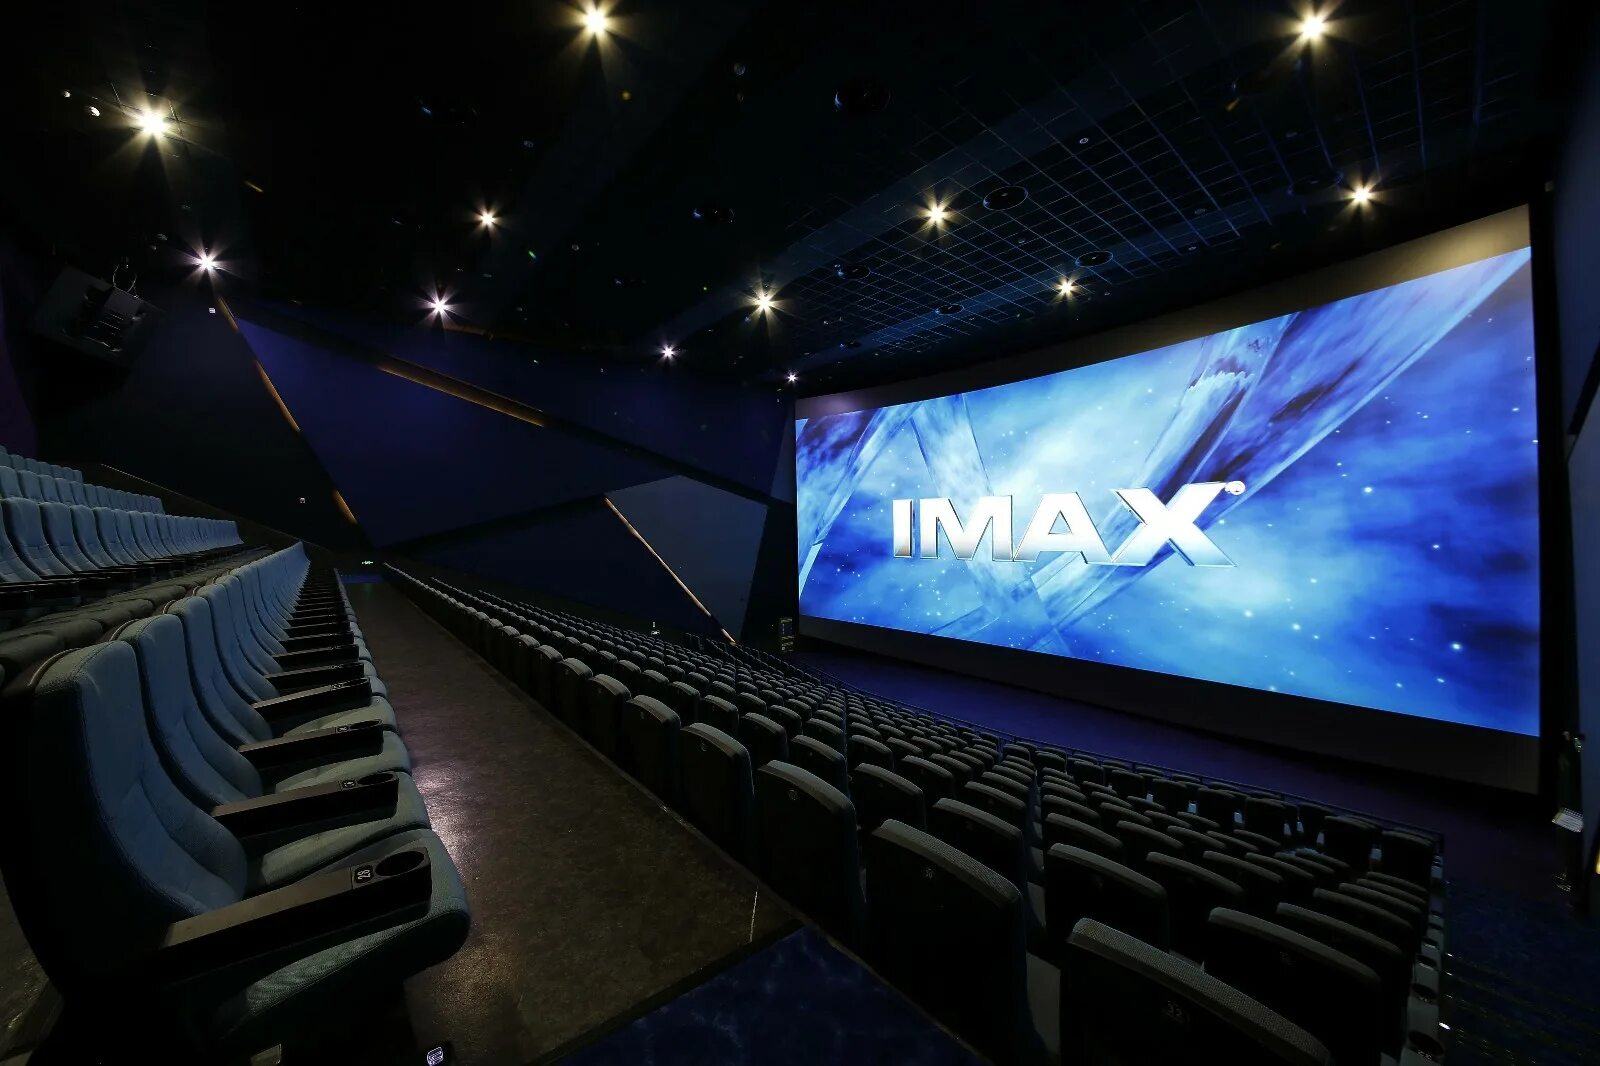 В каких кинотеатрах показывают дюну. Баргузин Иркутск зал IMAX. IMAX экран. IMAX проектор. Cinema 9 IMAX — зал IMAX.